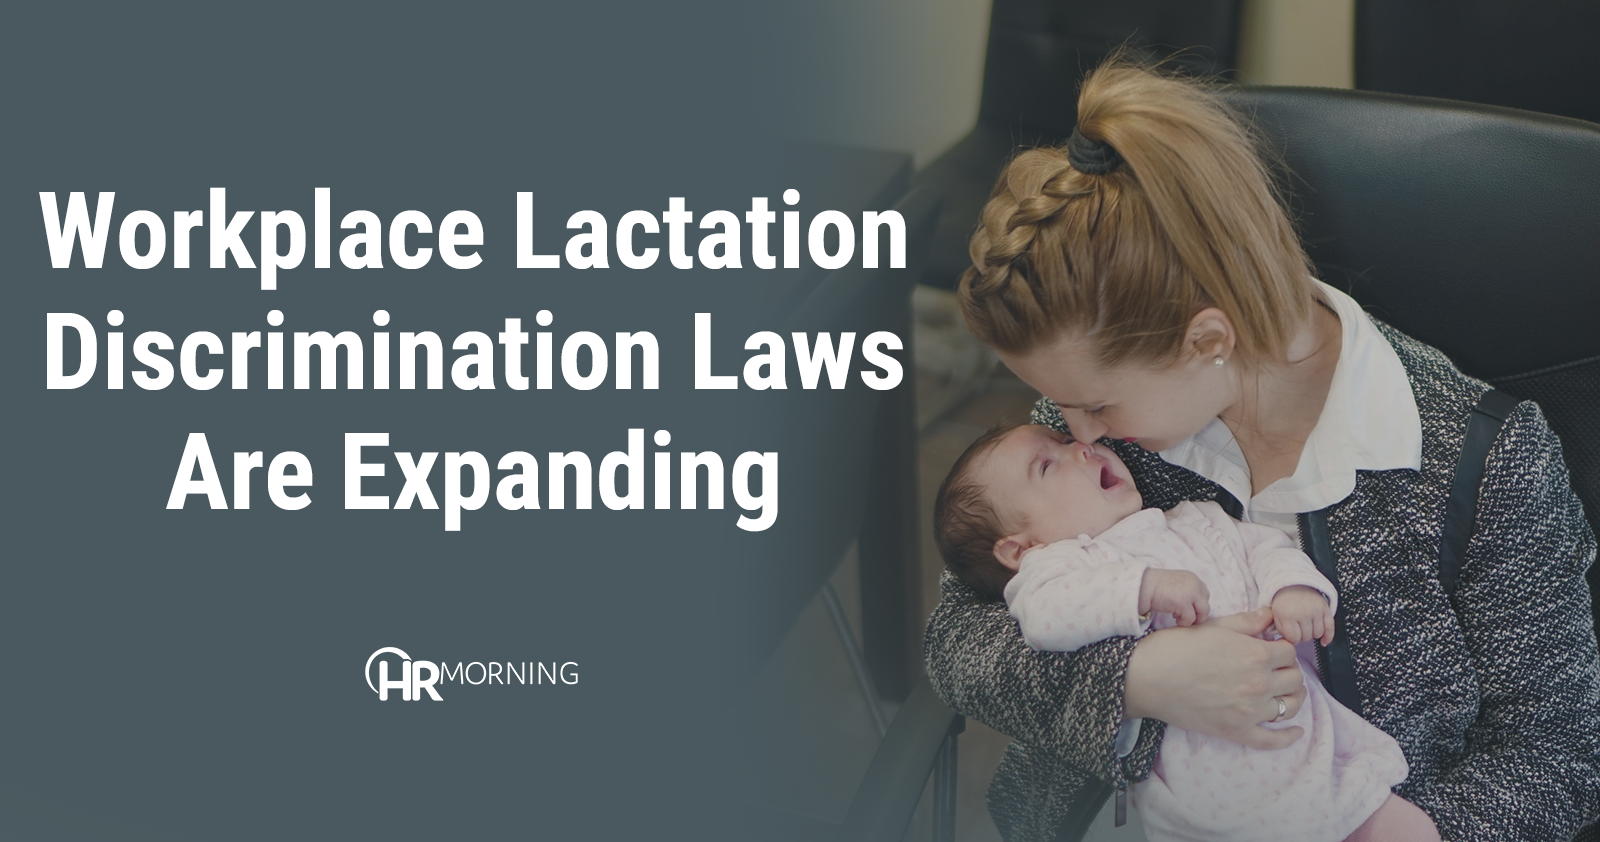 Workplace lactation discrimination laws are expanding